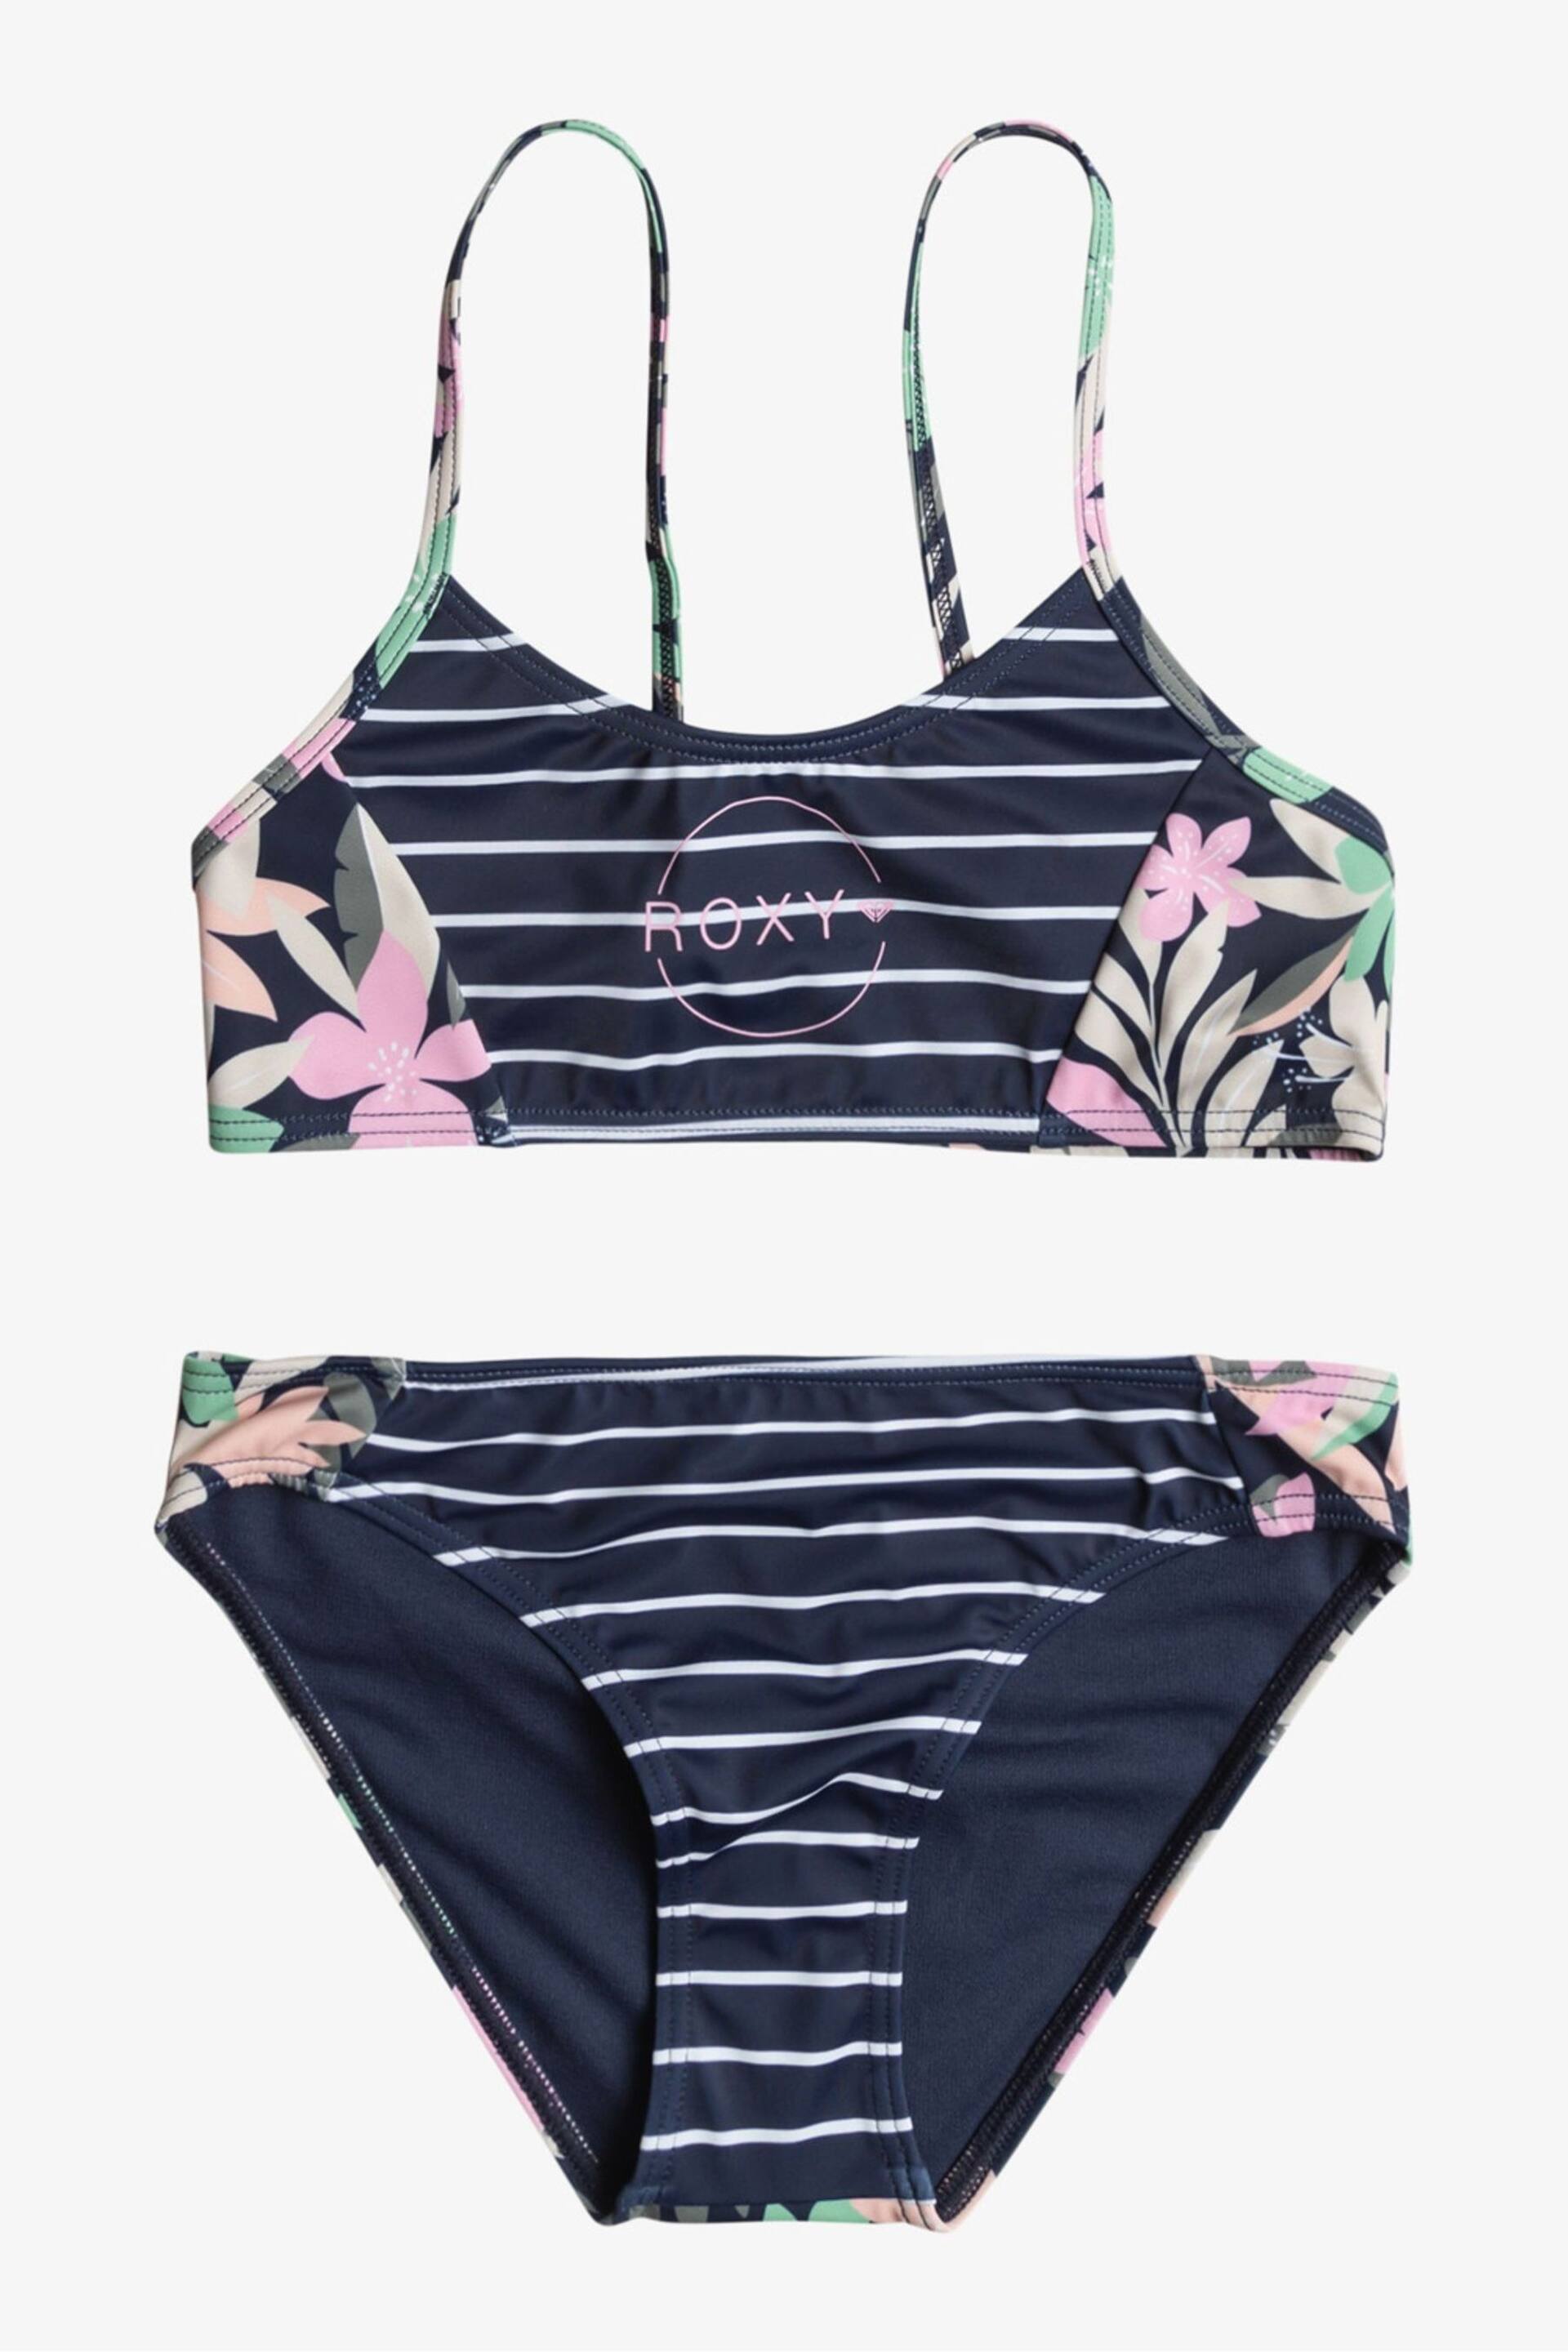 Roxy Navy Blue Stripe Print Bikini Set - Image 1 of 2